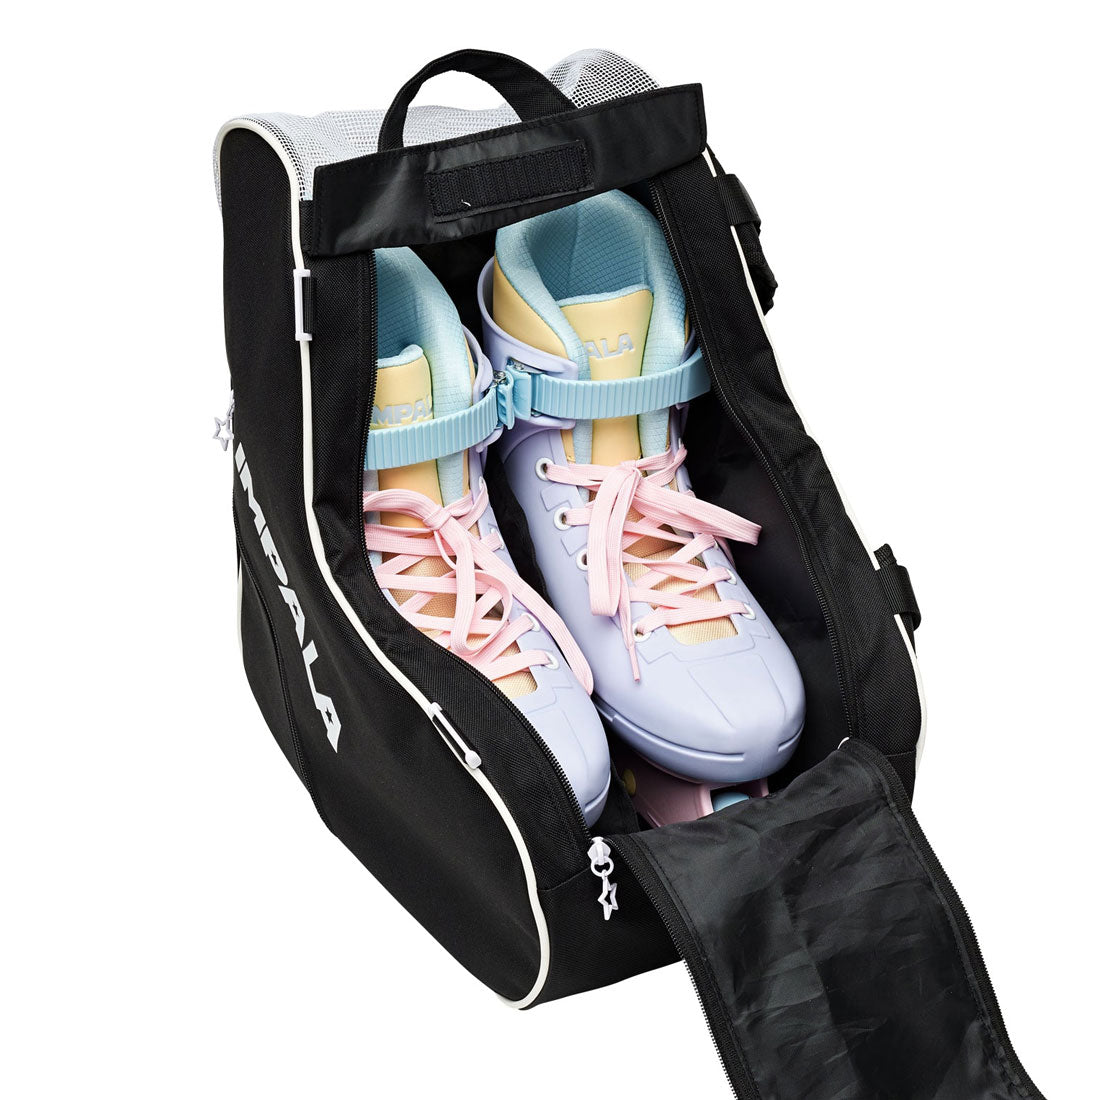 Impala Skate Bag - Black Bags and Backpacks